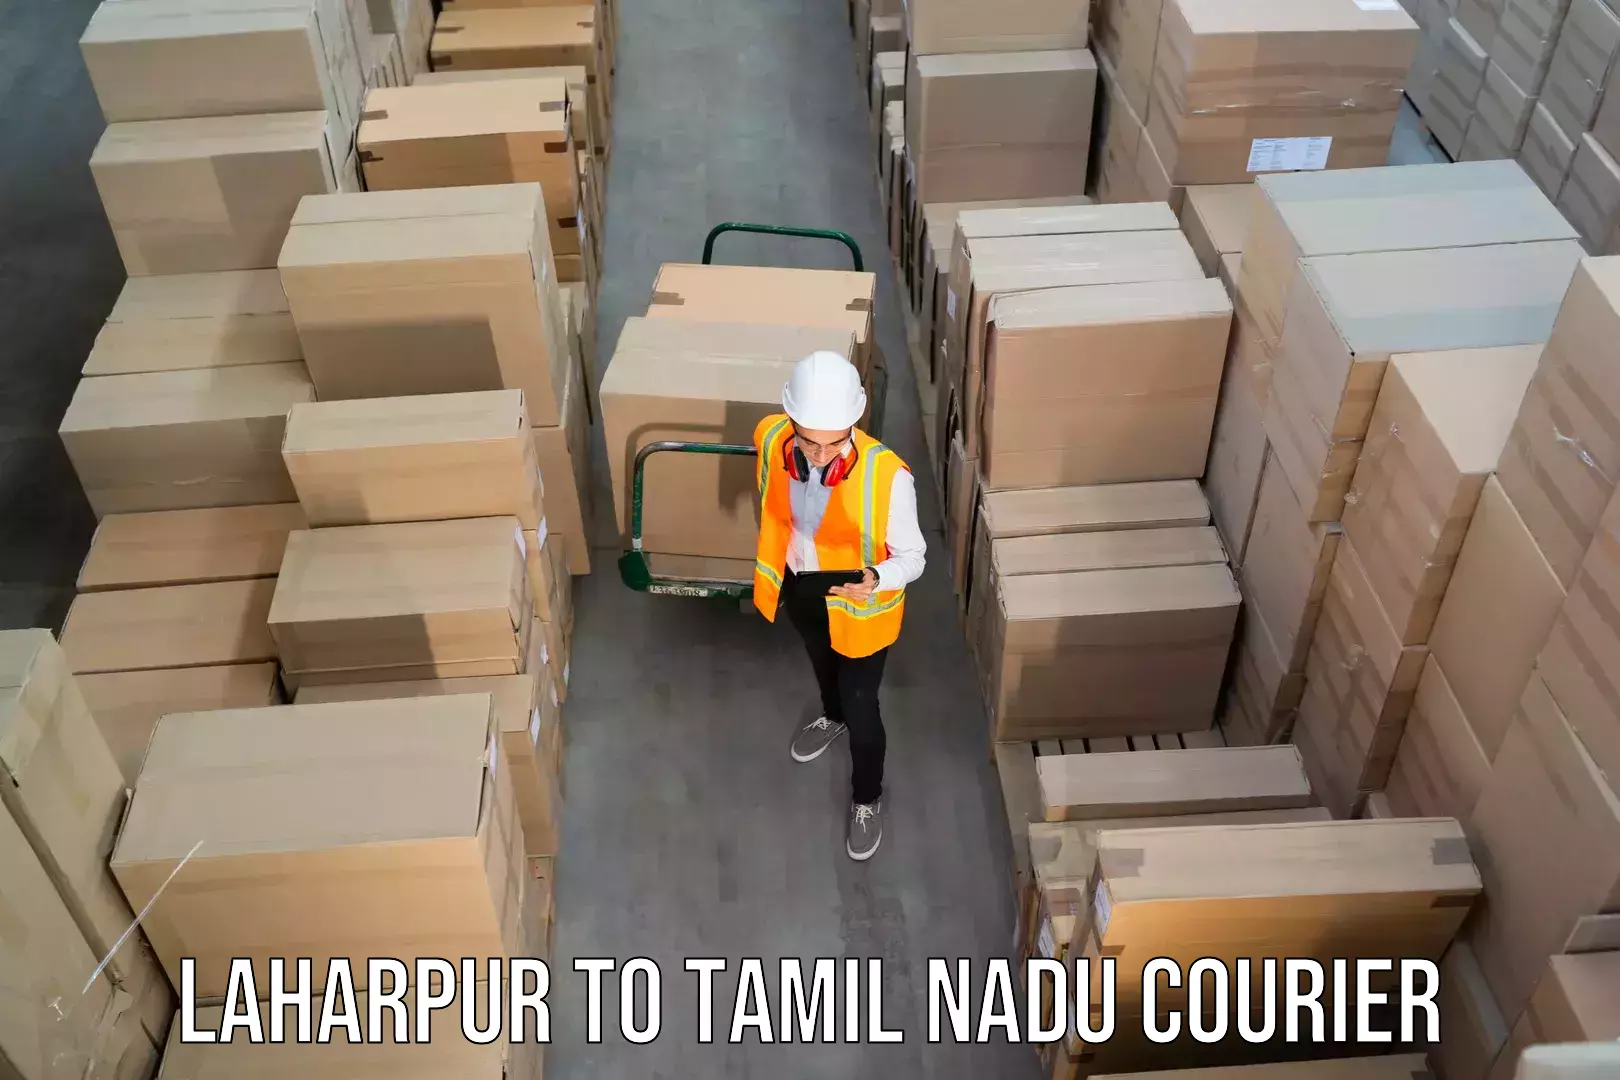 Sustainable courier practices Laharpur to Tirunelveli